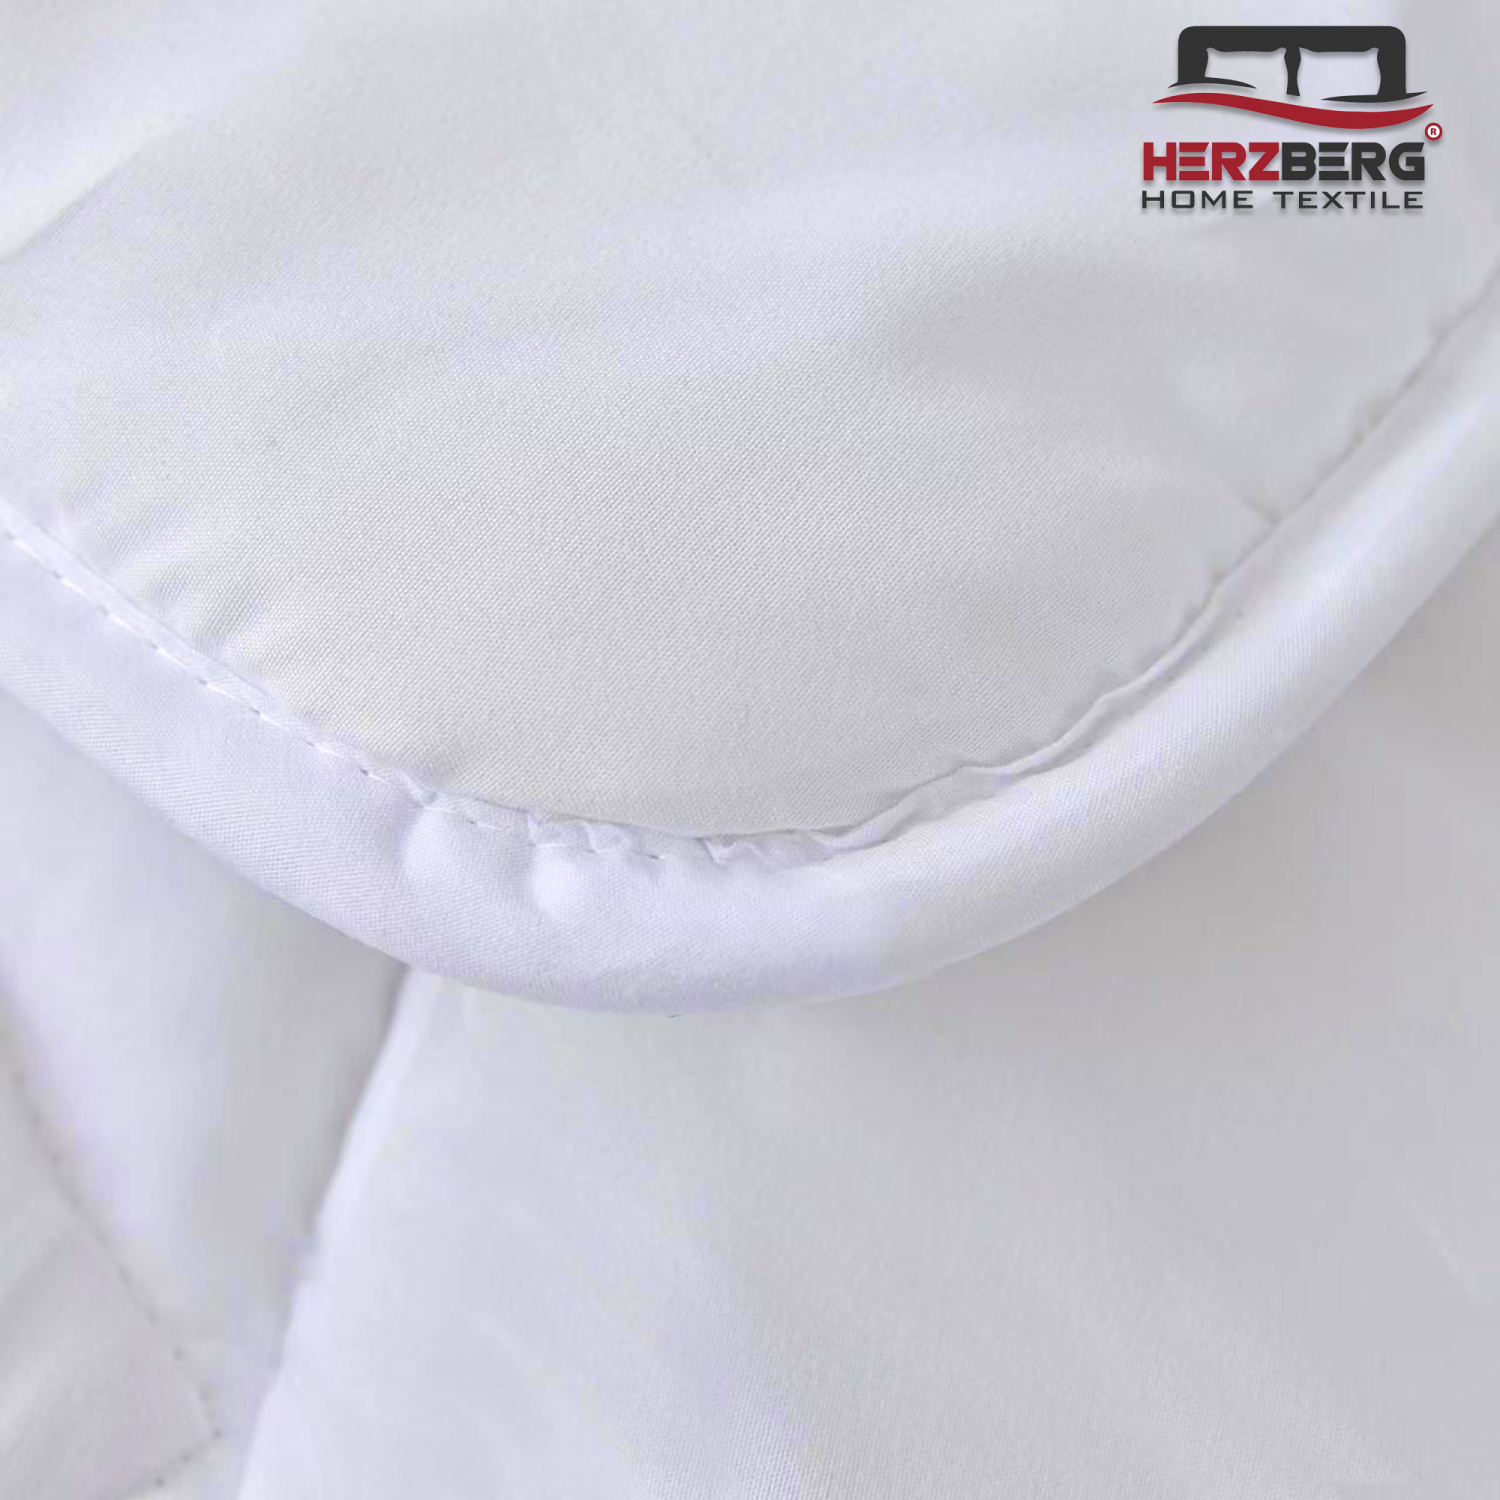 Hezberg Textile Herzberg Hg-22067Wd: 4 Sterren Kwaliteit Wit Dekbed - 200X200Cm